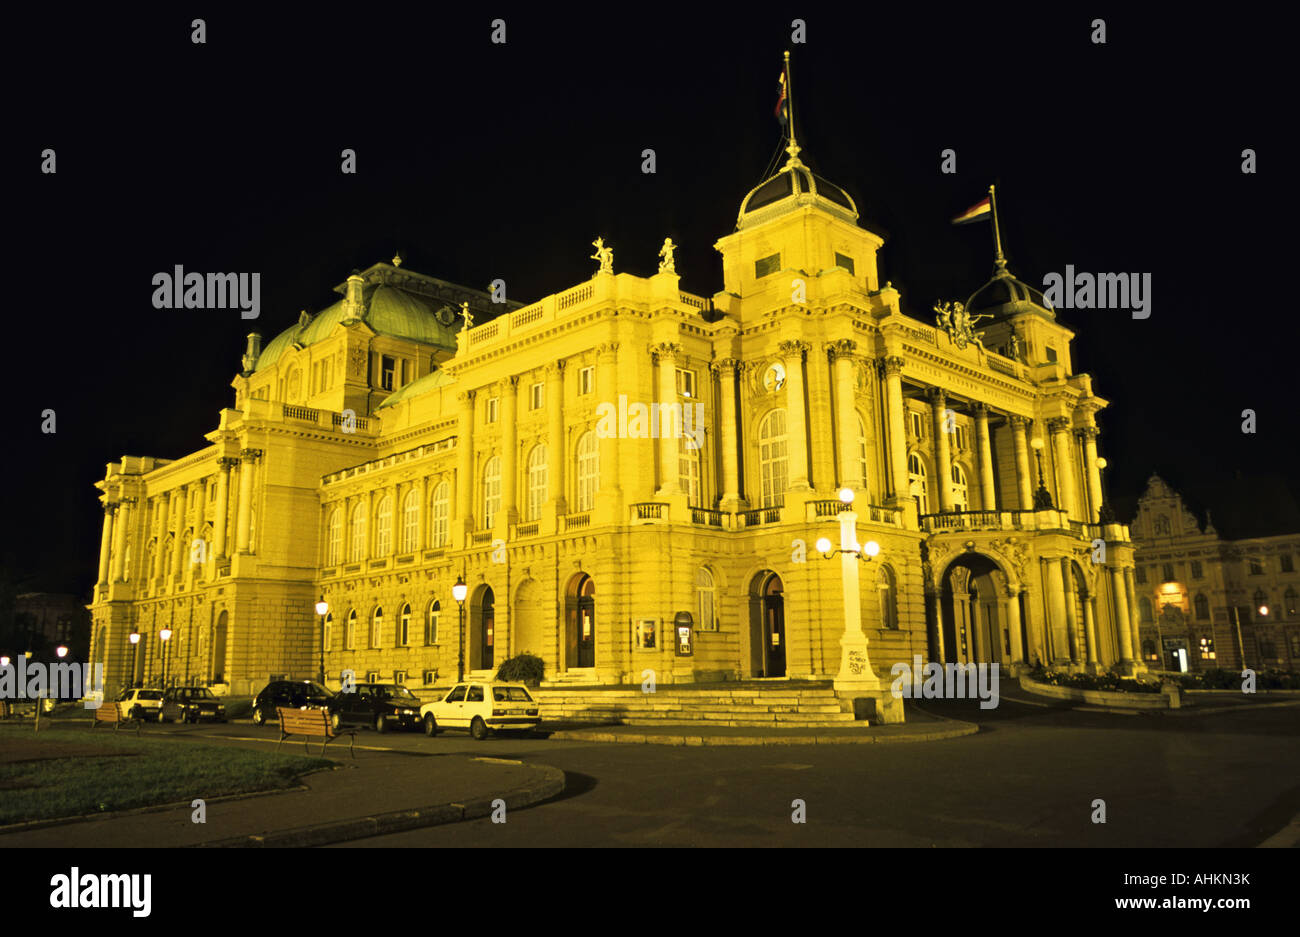 HRV Kroatien Zagreb Nacht Das Nationaltheater in Zagreb Croatia Night The National Theatre in Zagreb Stock Photo